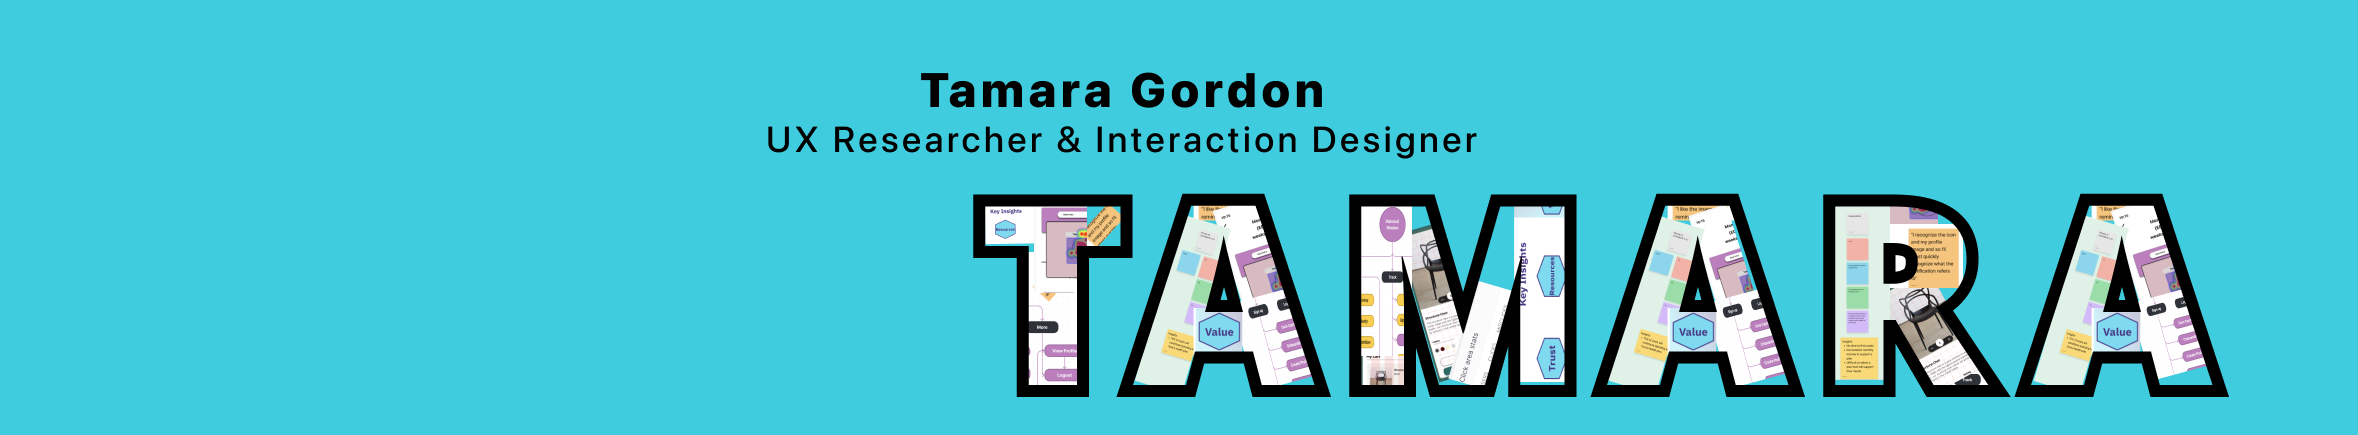 Tamara Gordon's profile banner